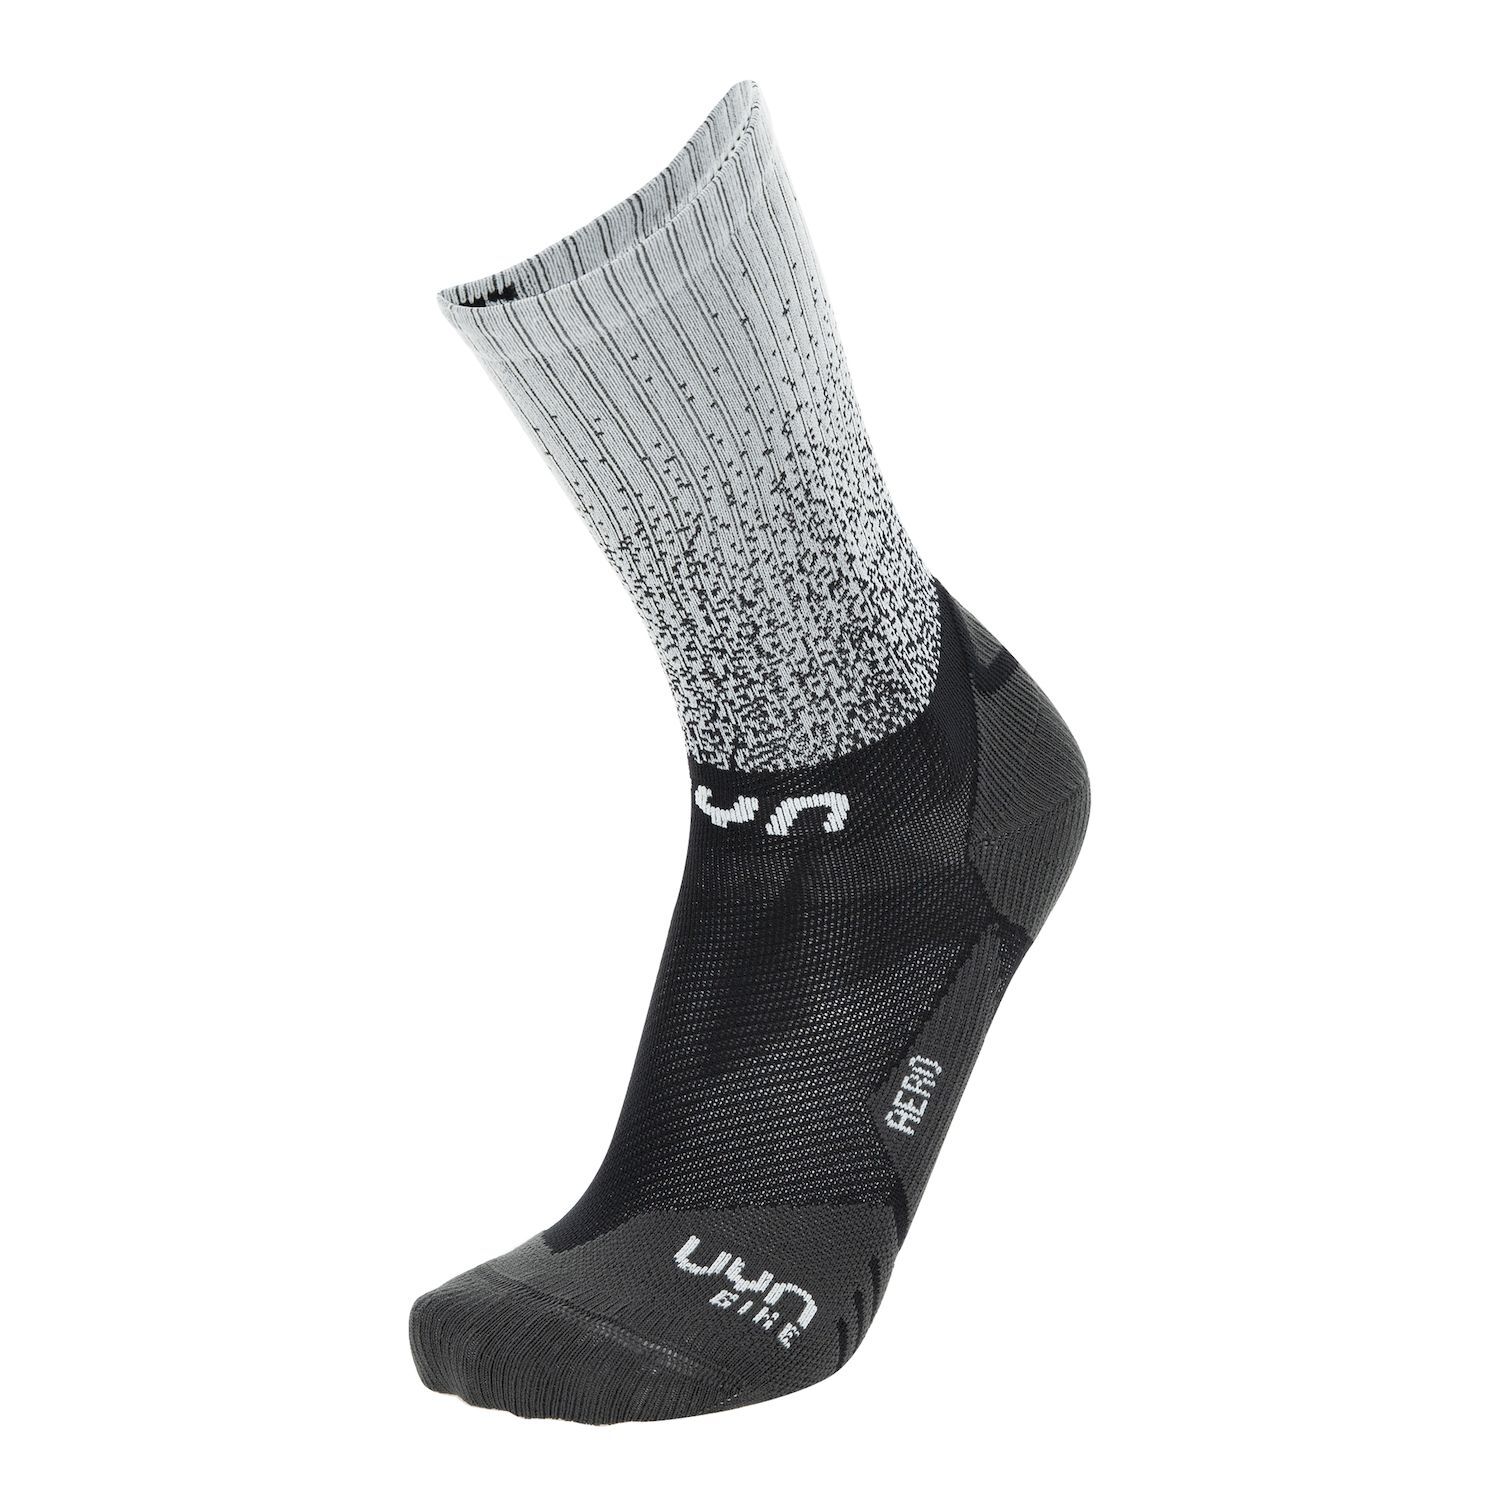 Uyn Man Cycling Aero - Cycling socks - Men's